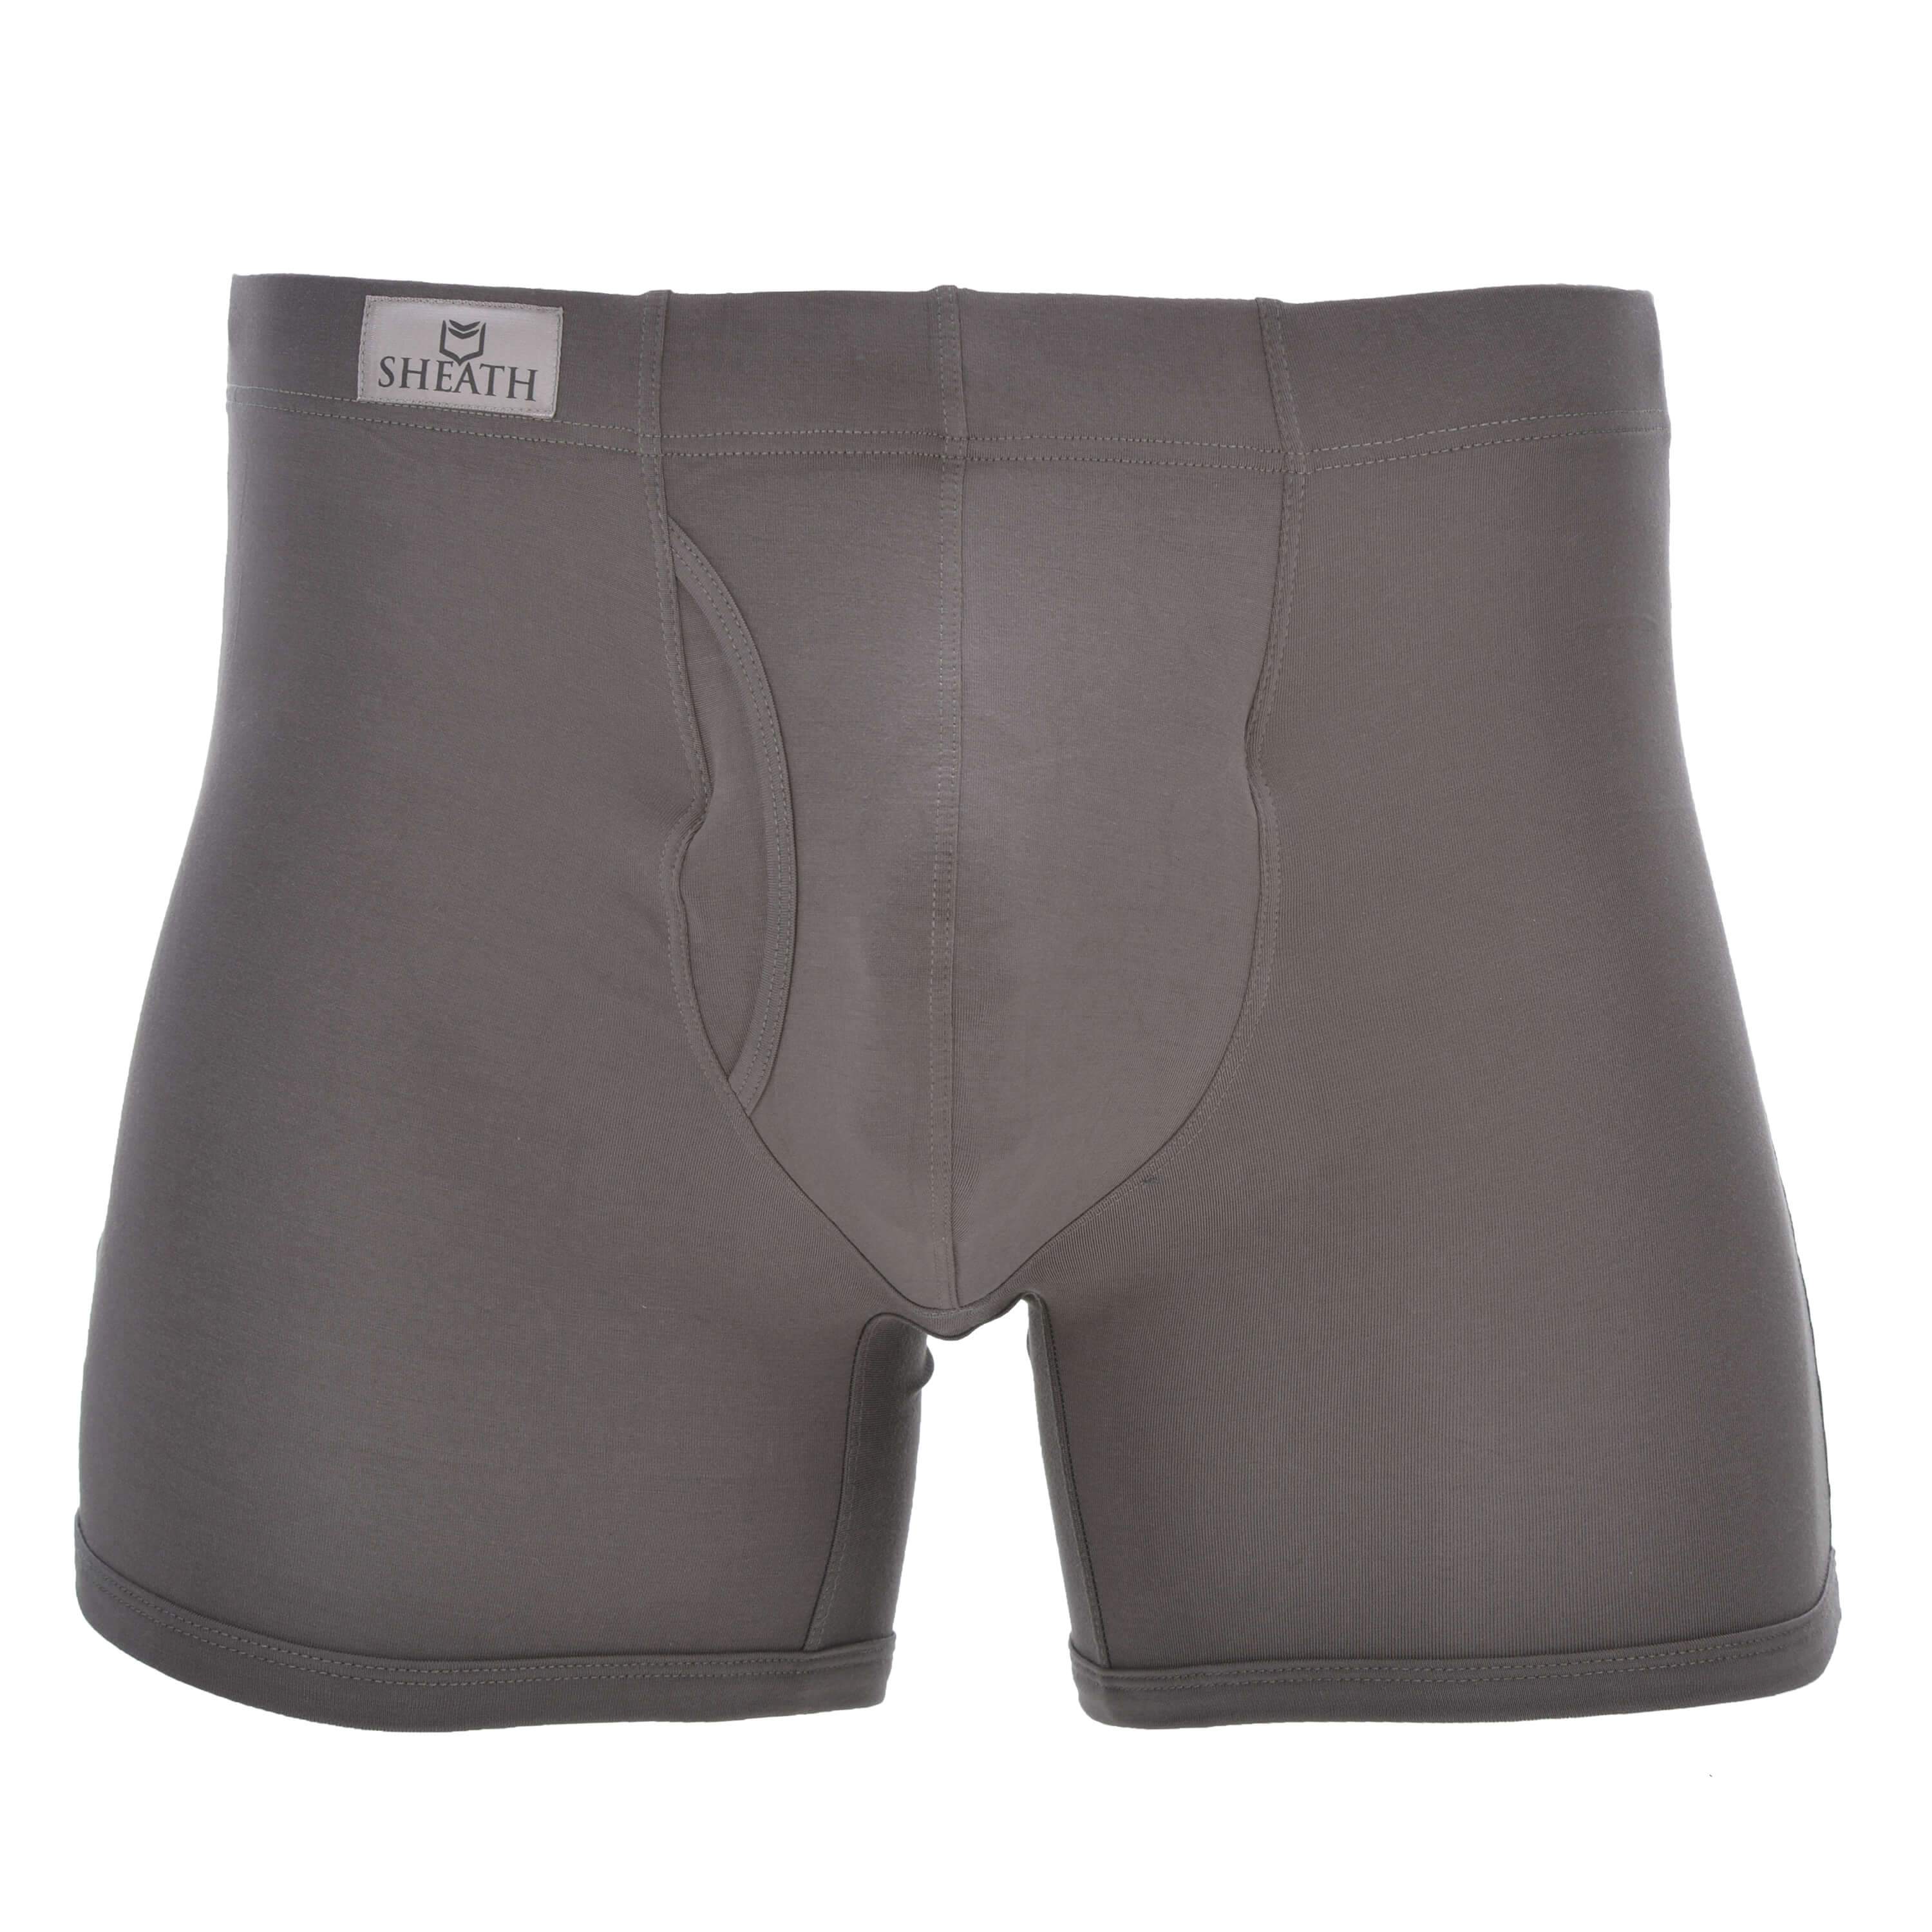 SHEATH 3.21 - Men's Dual Pouch Fly Underwear - SHEATH UNDERWEAR